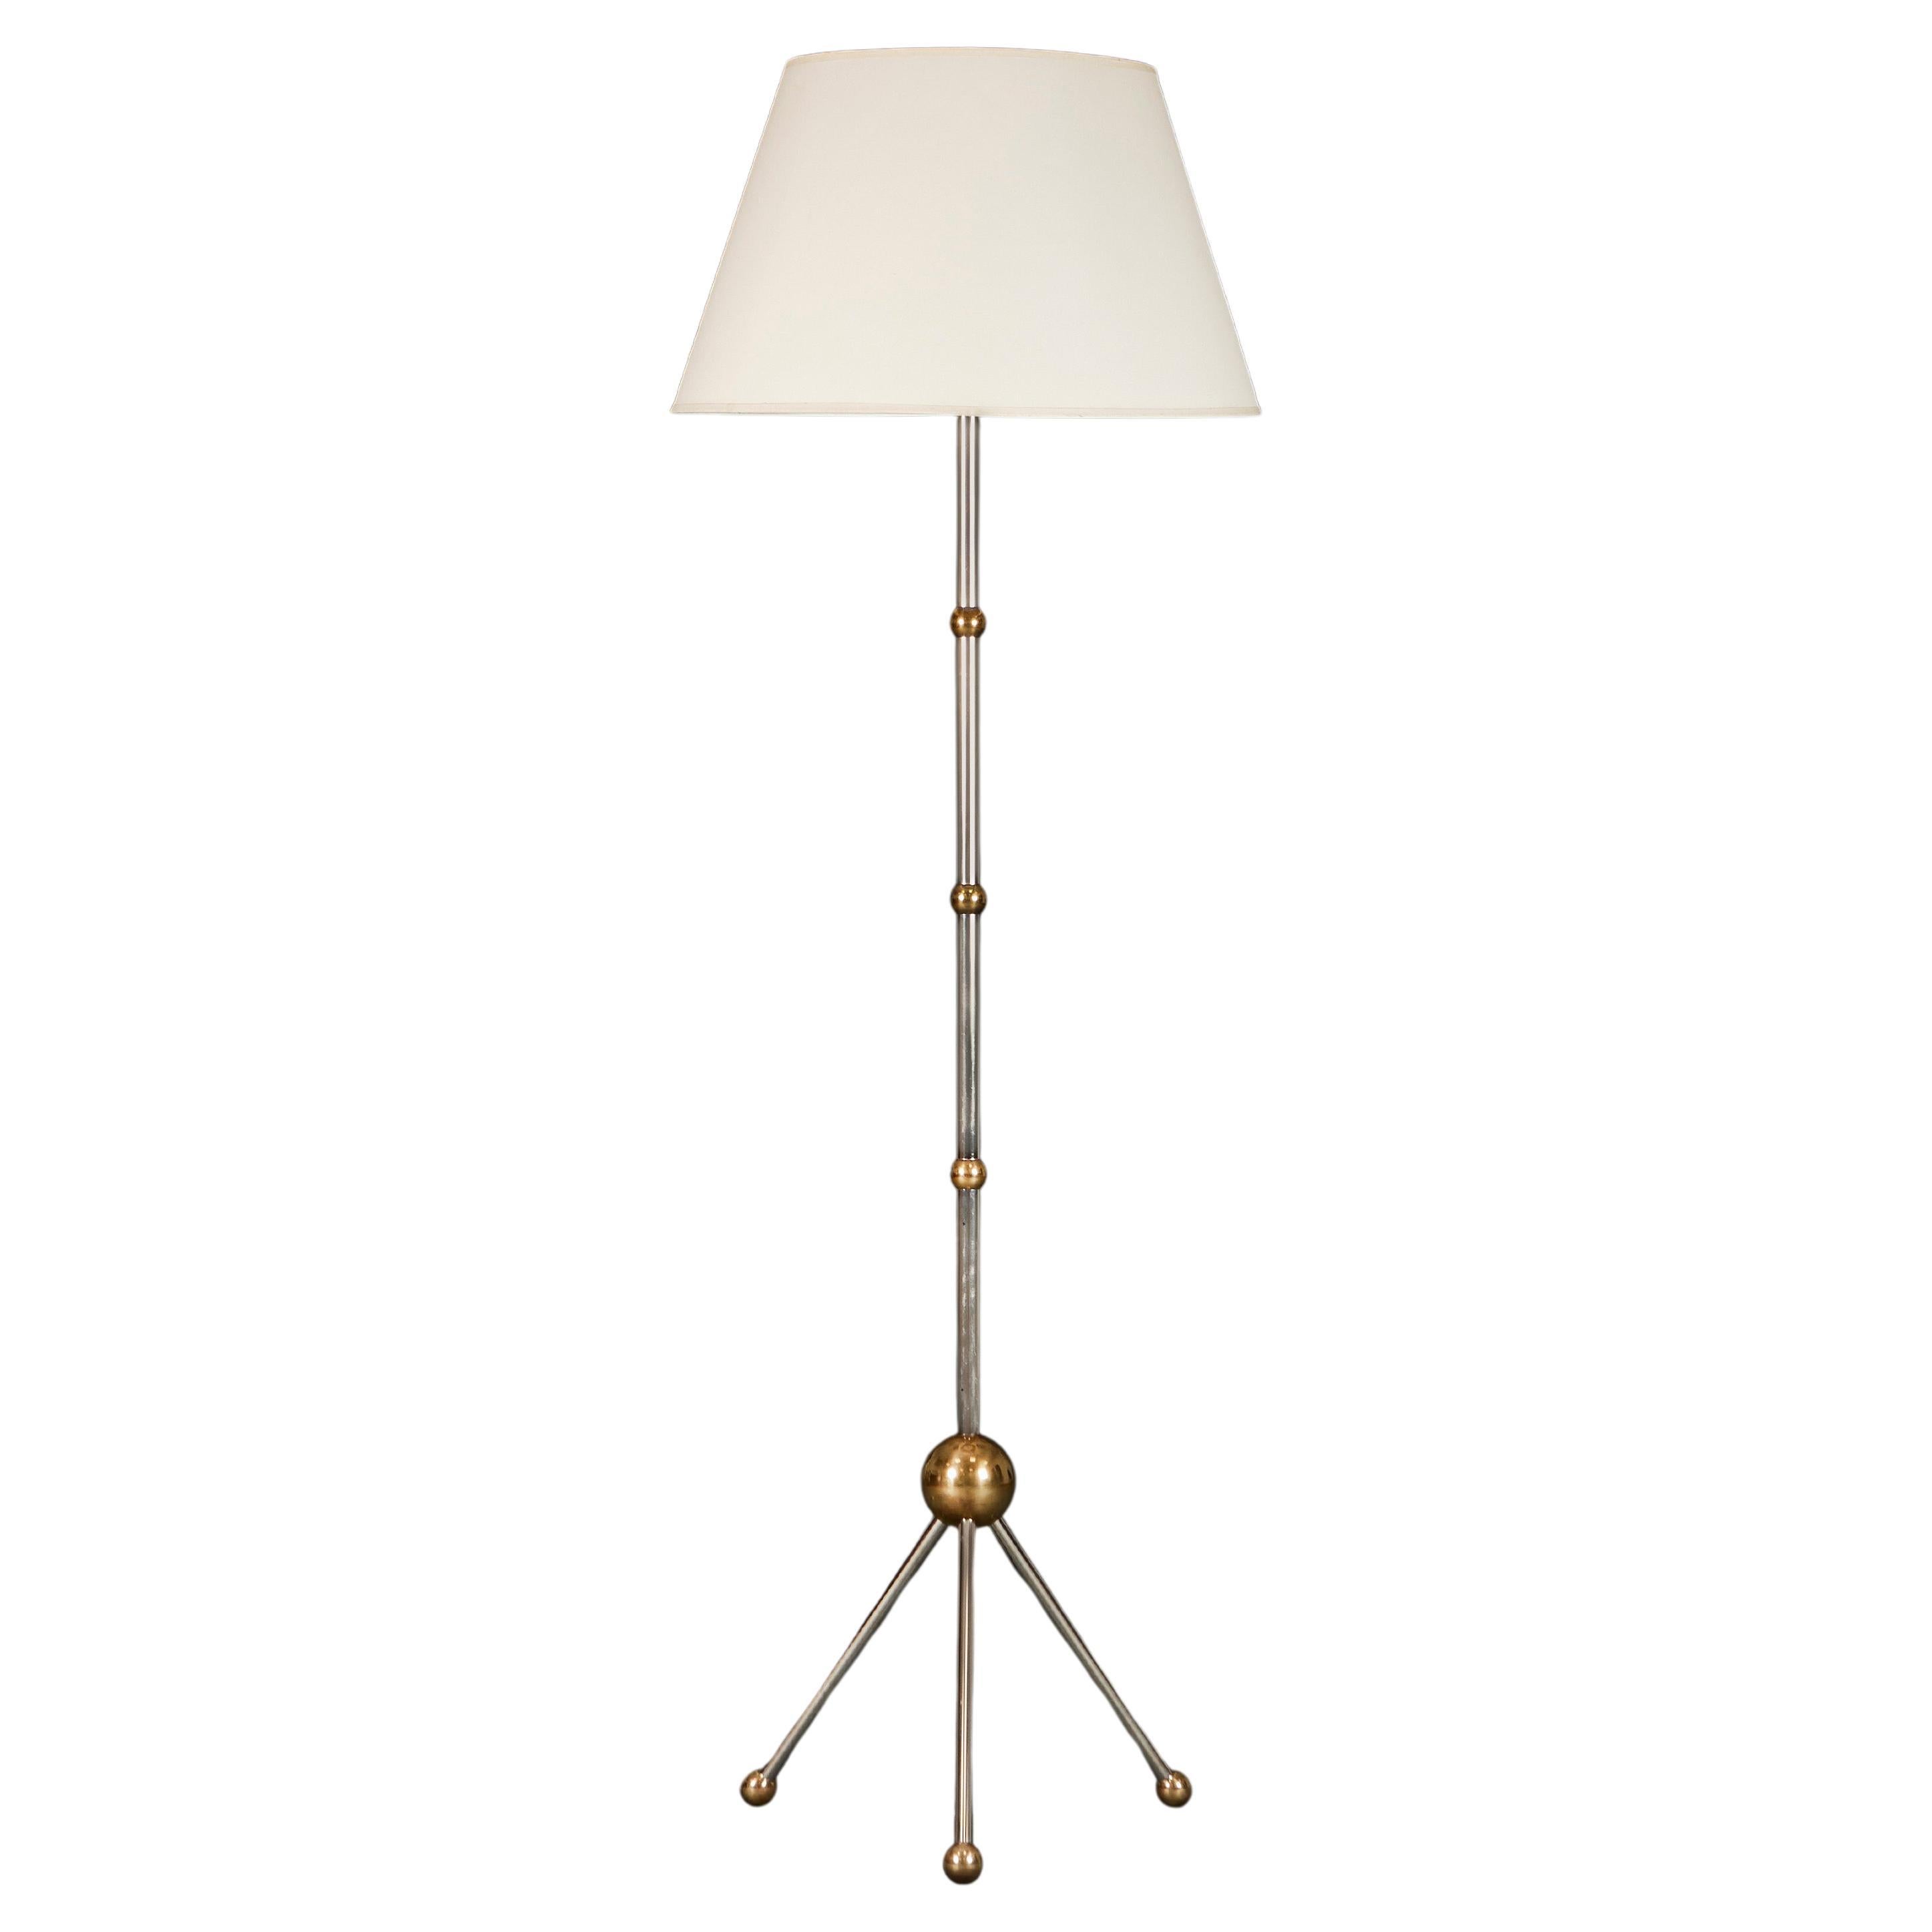 A Steel and Brass Sputnik Floor Lamp For Sale